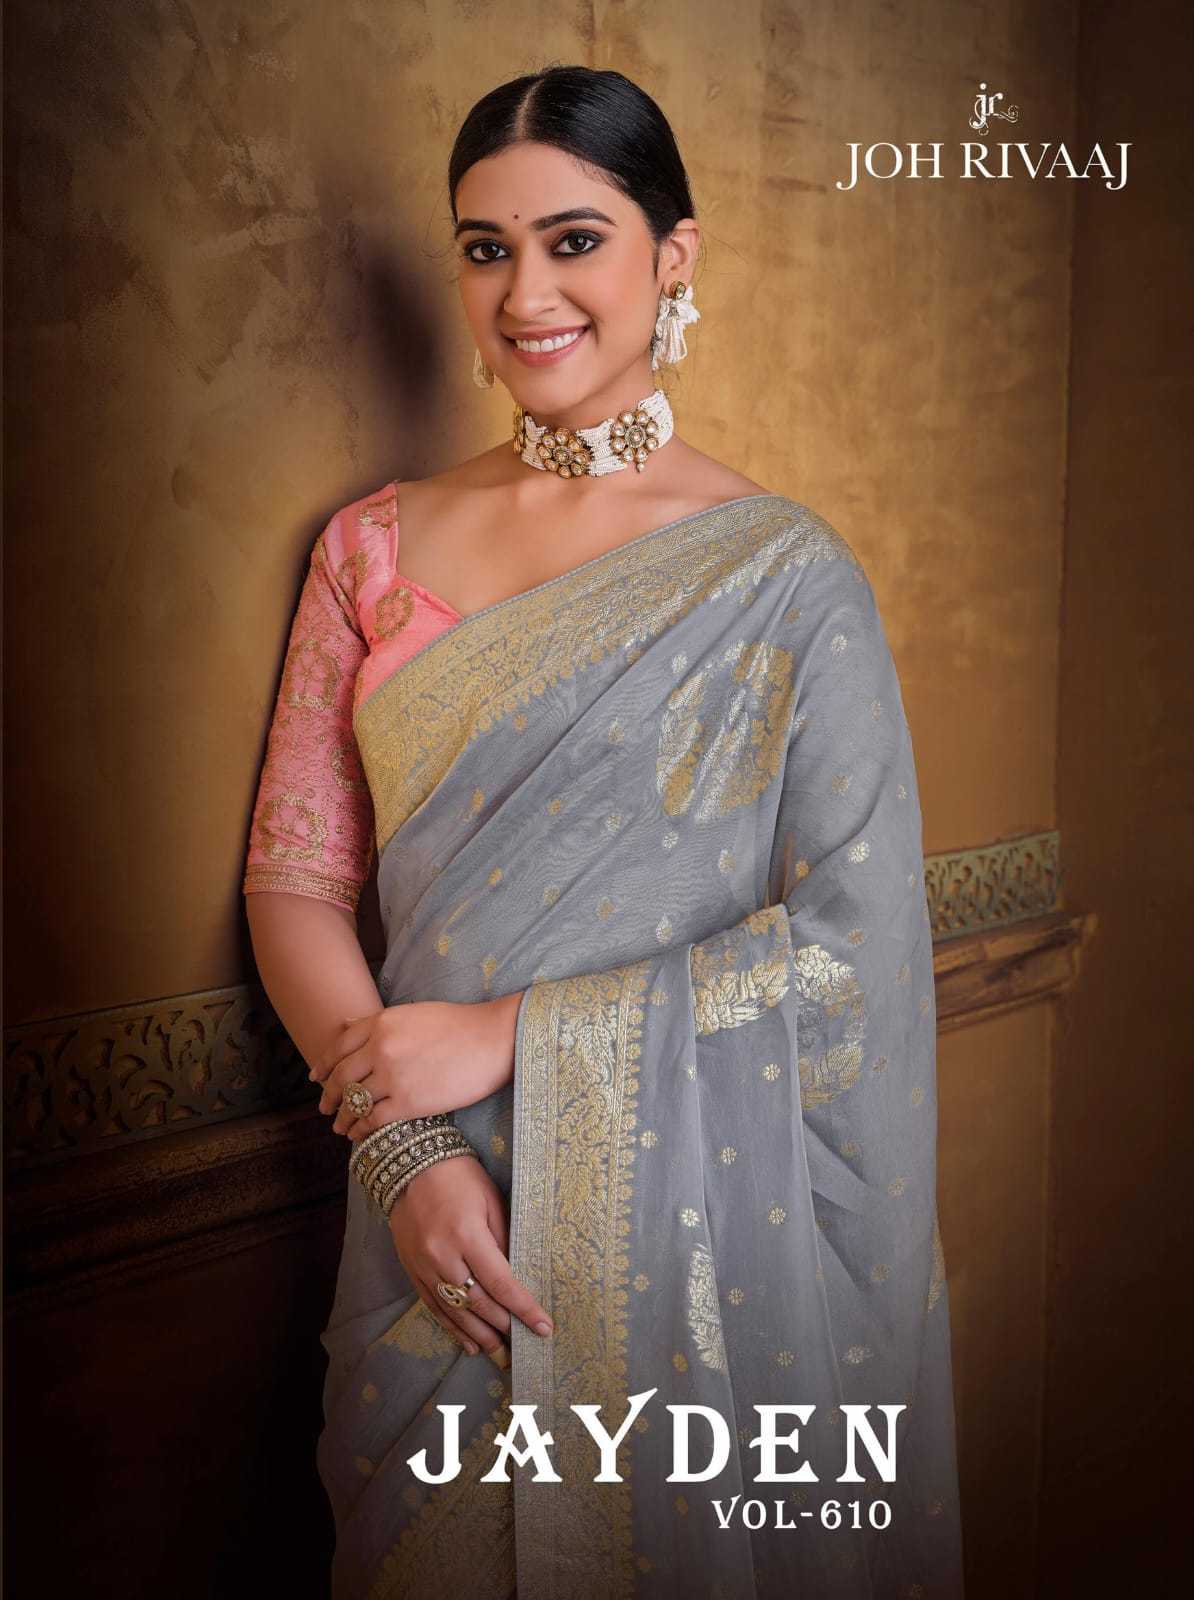 joh rivaaj jayden vol 610 beautiful party wear dola silk designer saree wholesaler